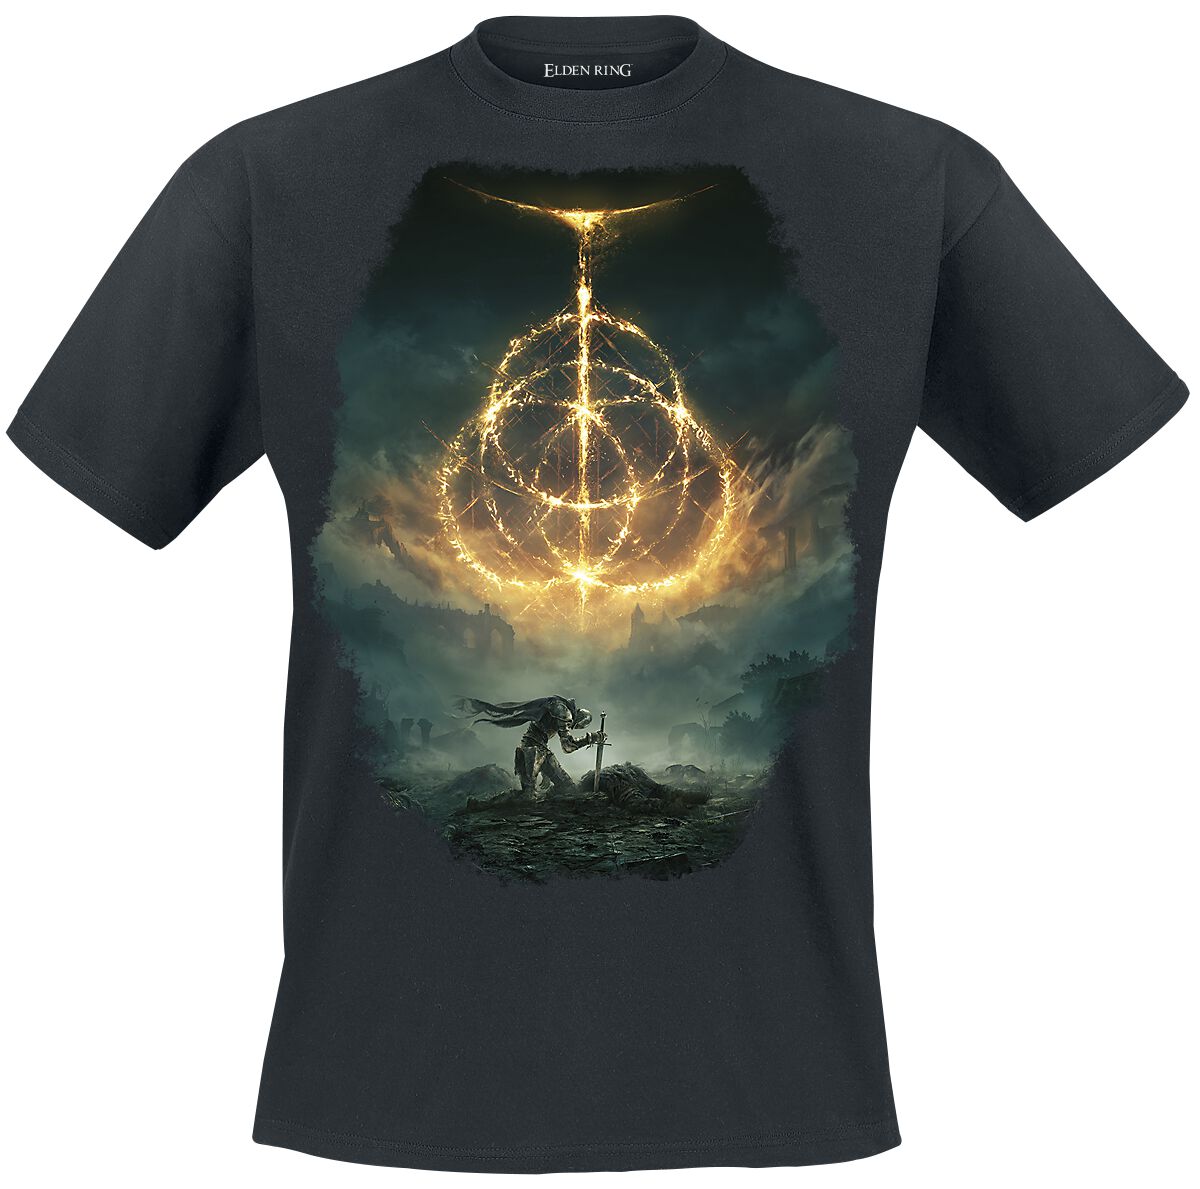 Elden Ring Cover T-Shirt schwarz in XXL